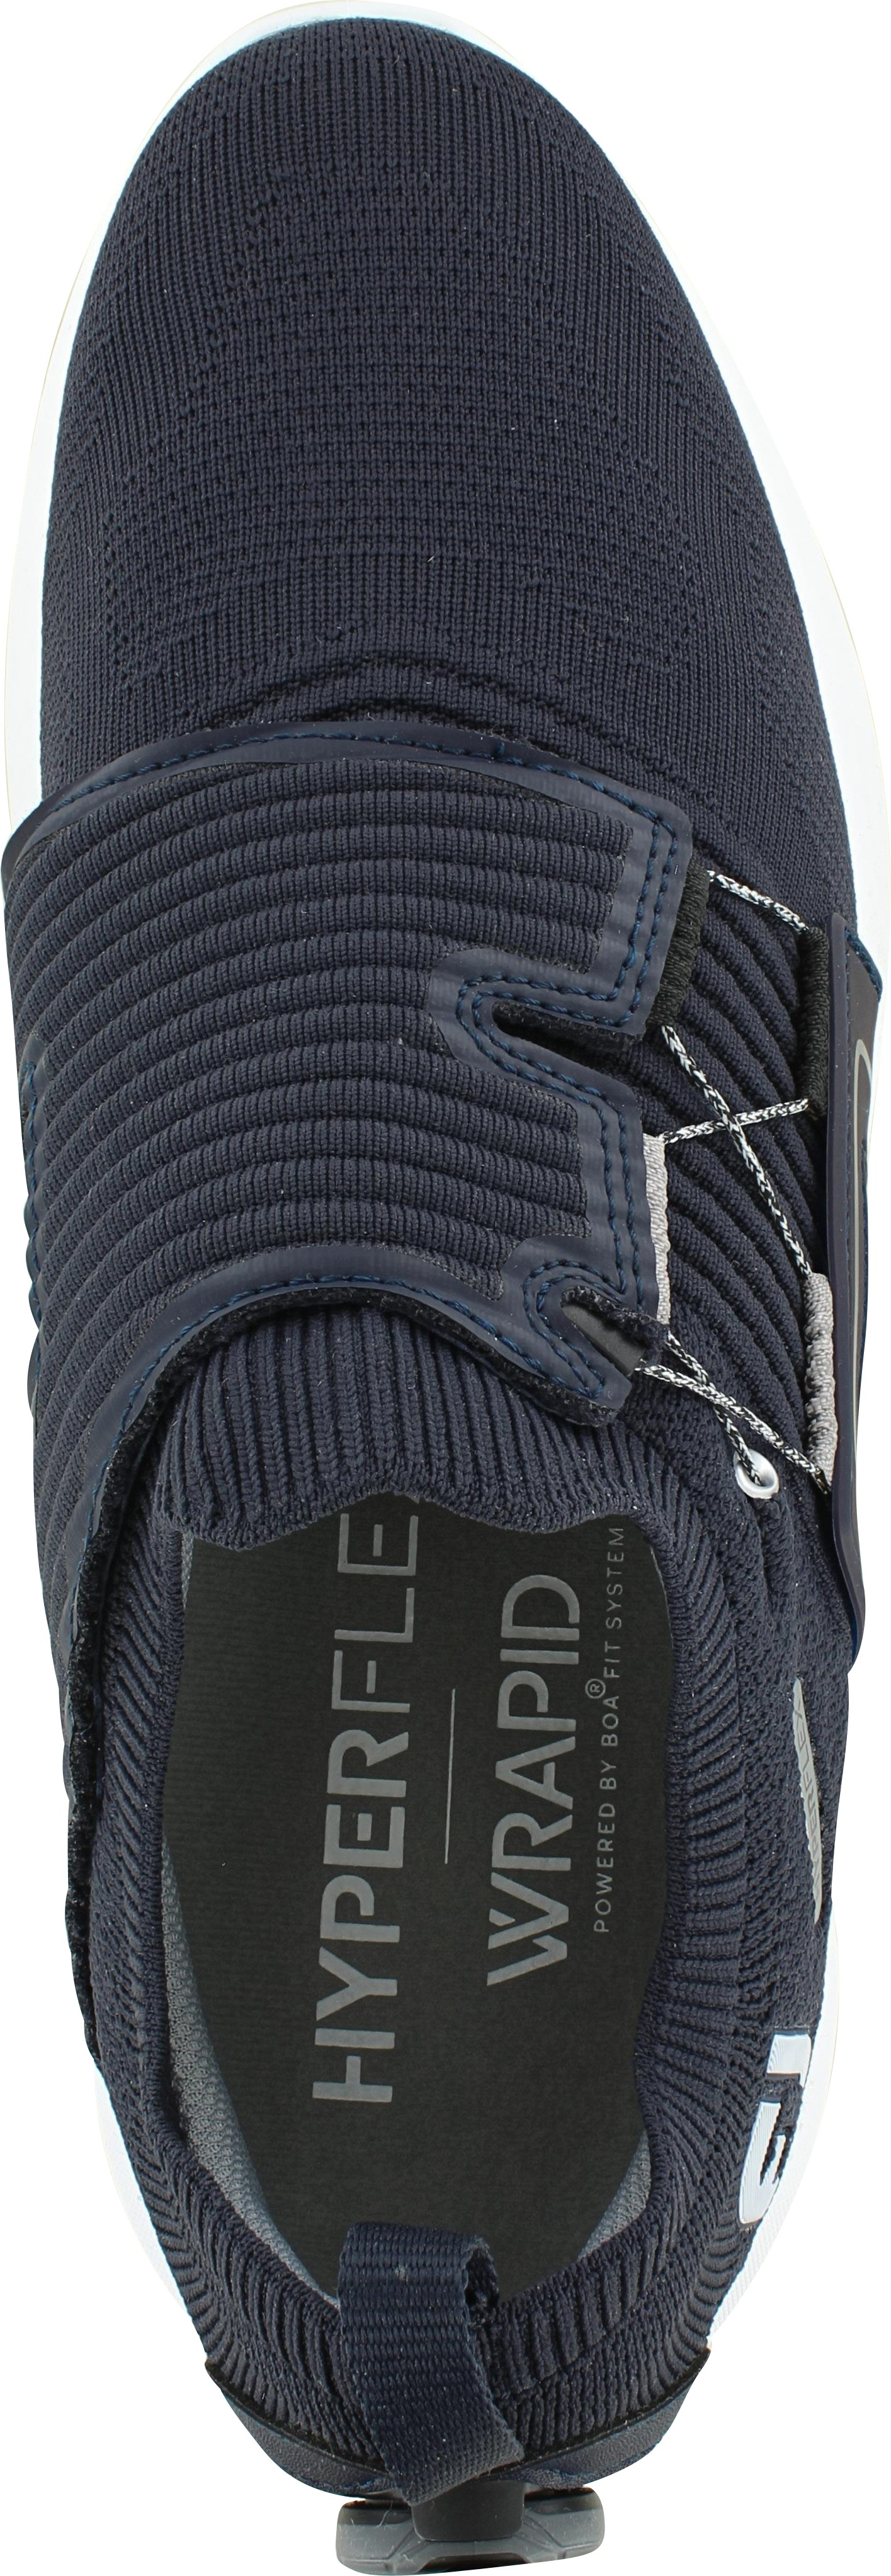 FootJoy Men's Hyperflex BOA Golf Shoes 51089 - Navy/White/Gold - 9.5 - Wide - image 5 of 8